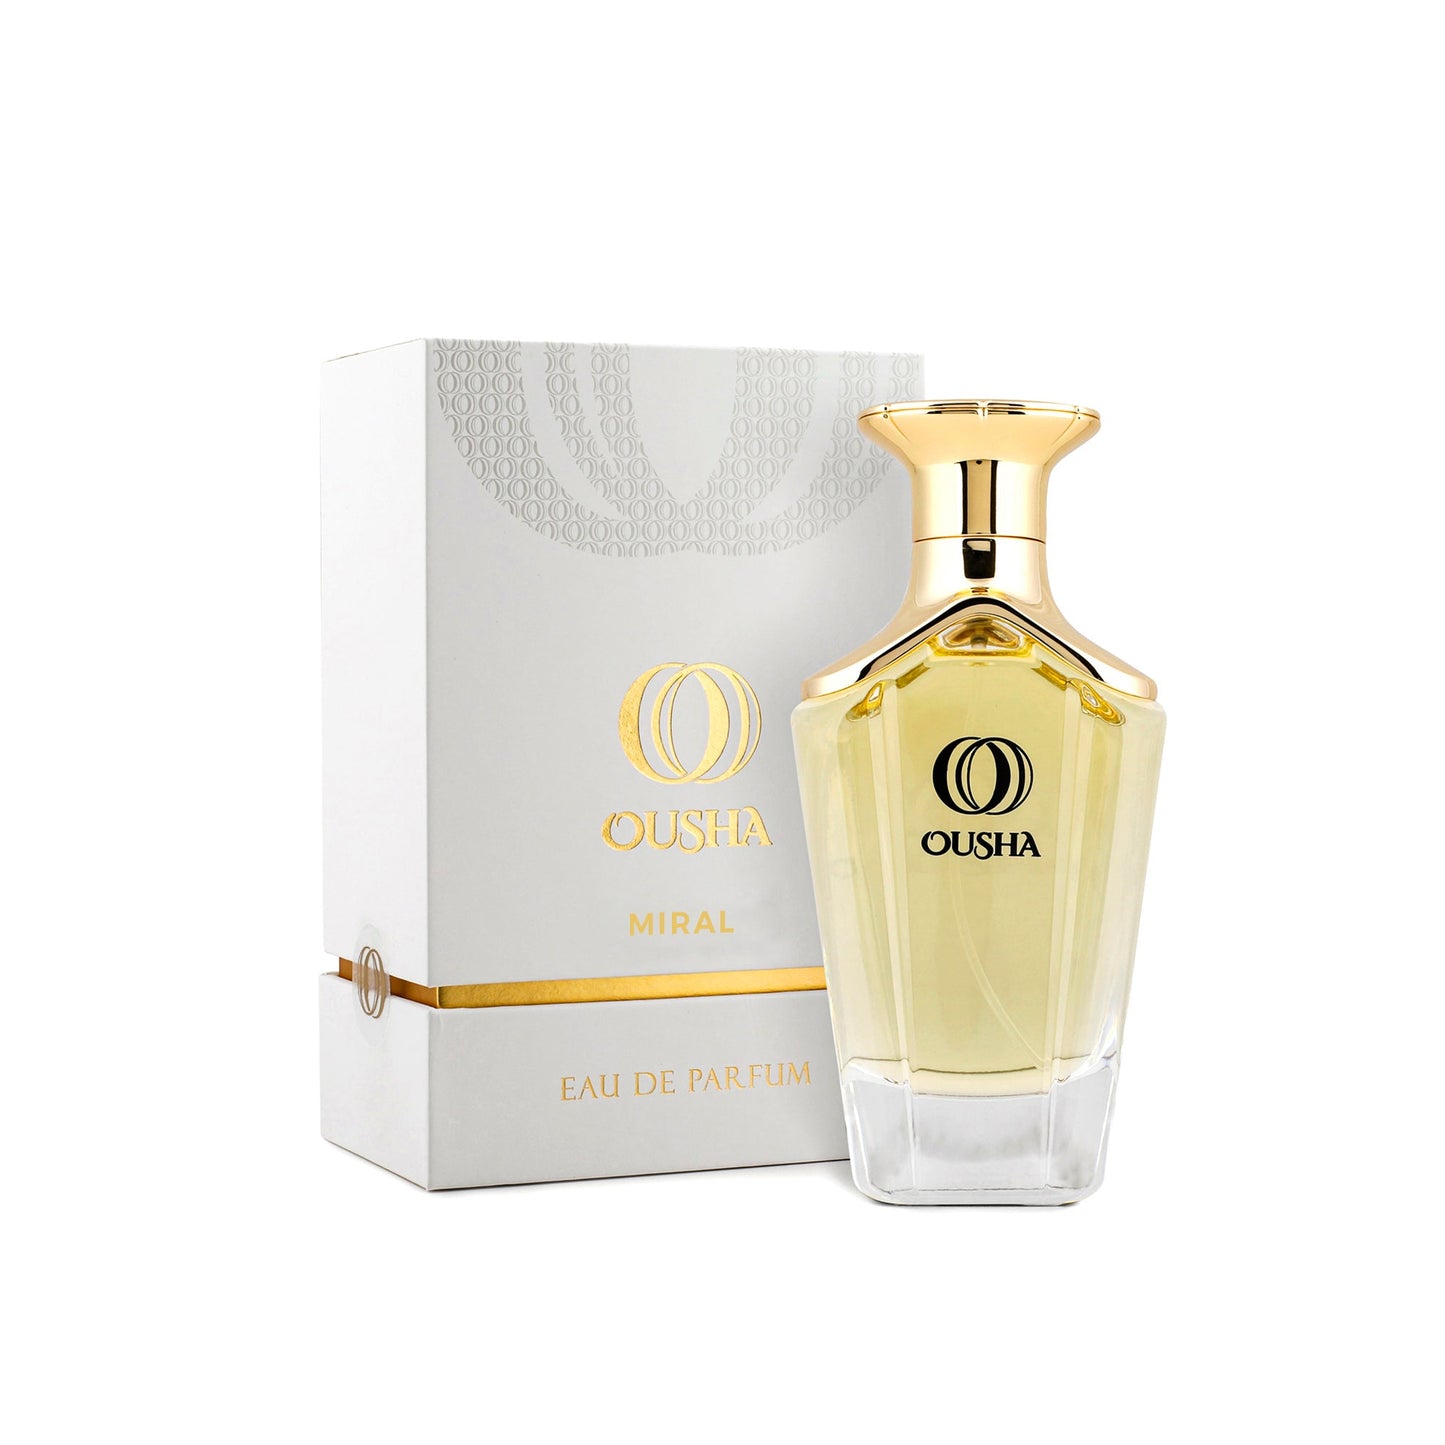 Ousha perfume - Ousha Miral  Perfume 75ml